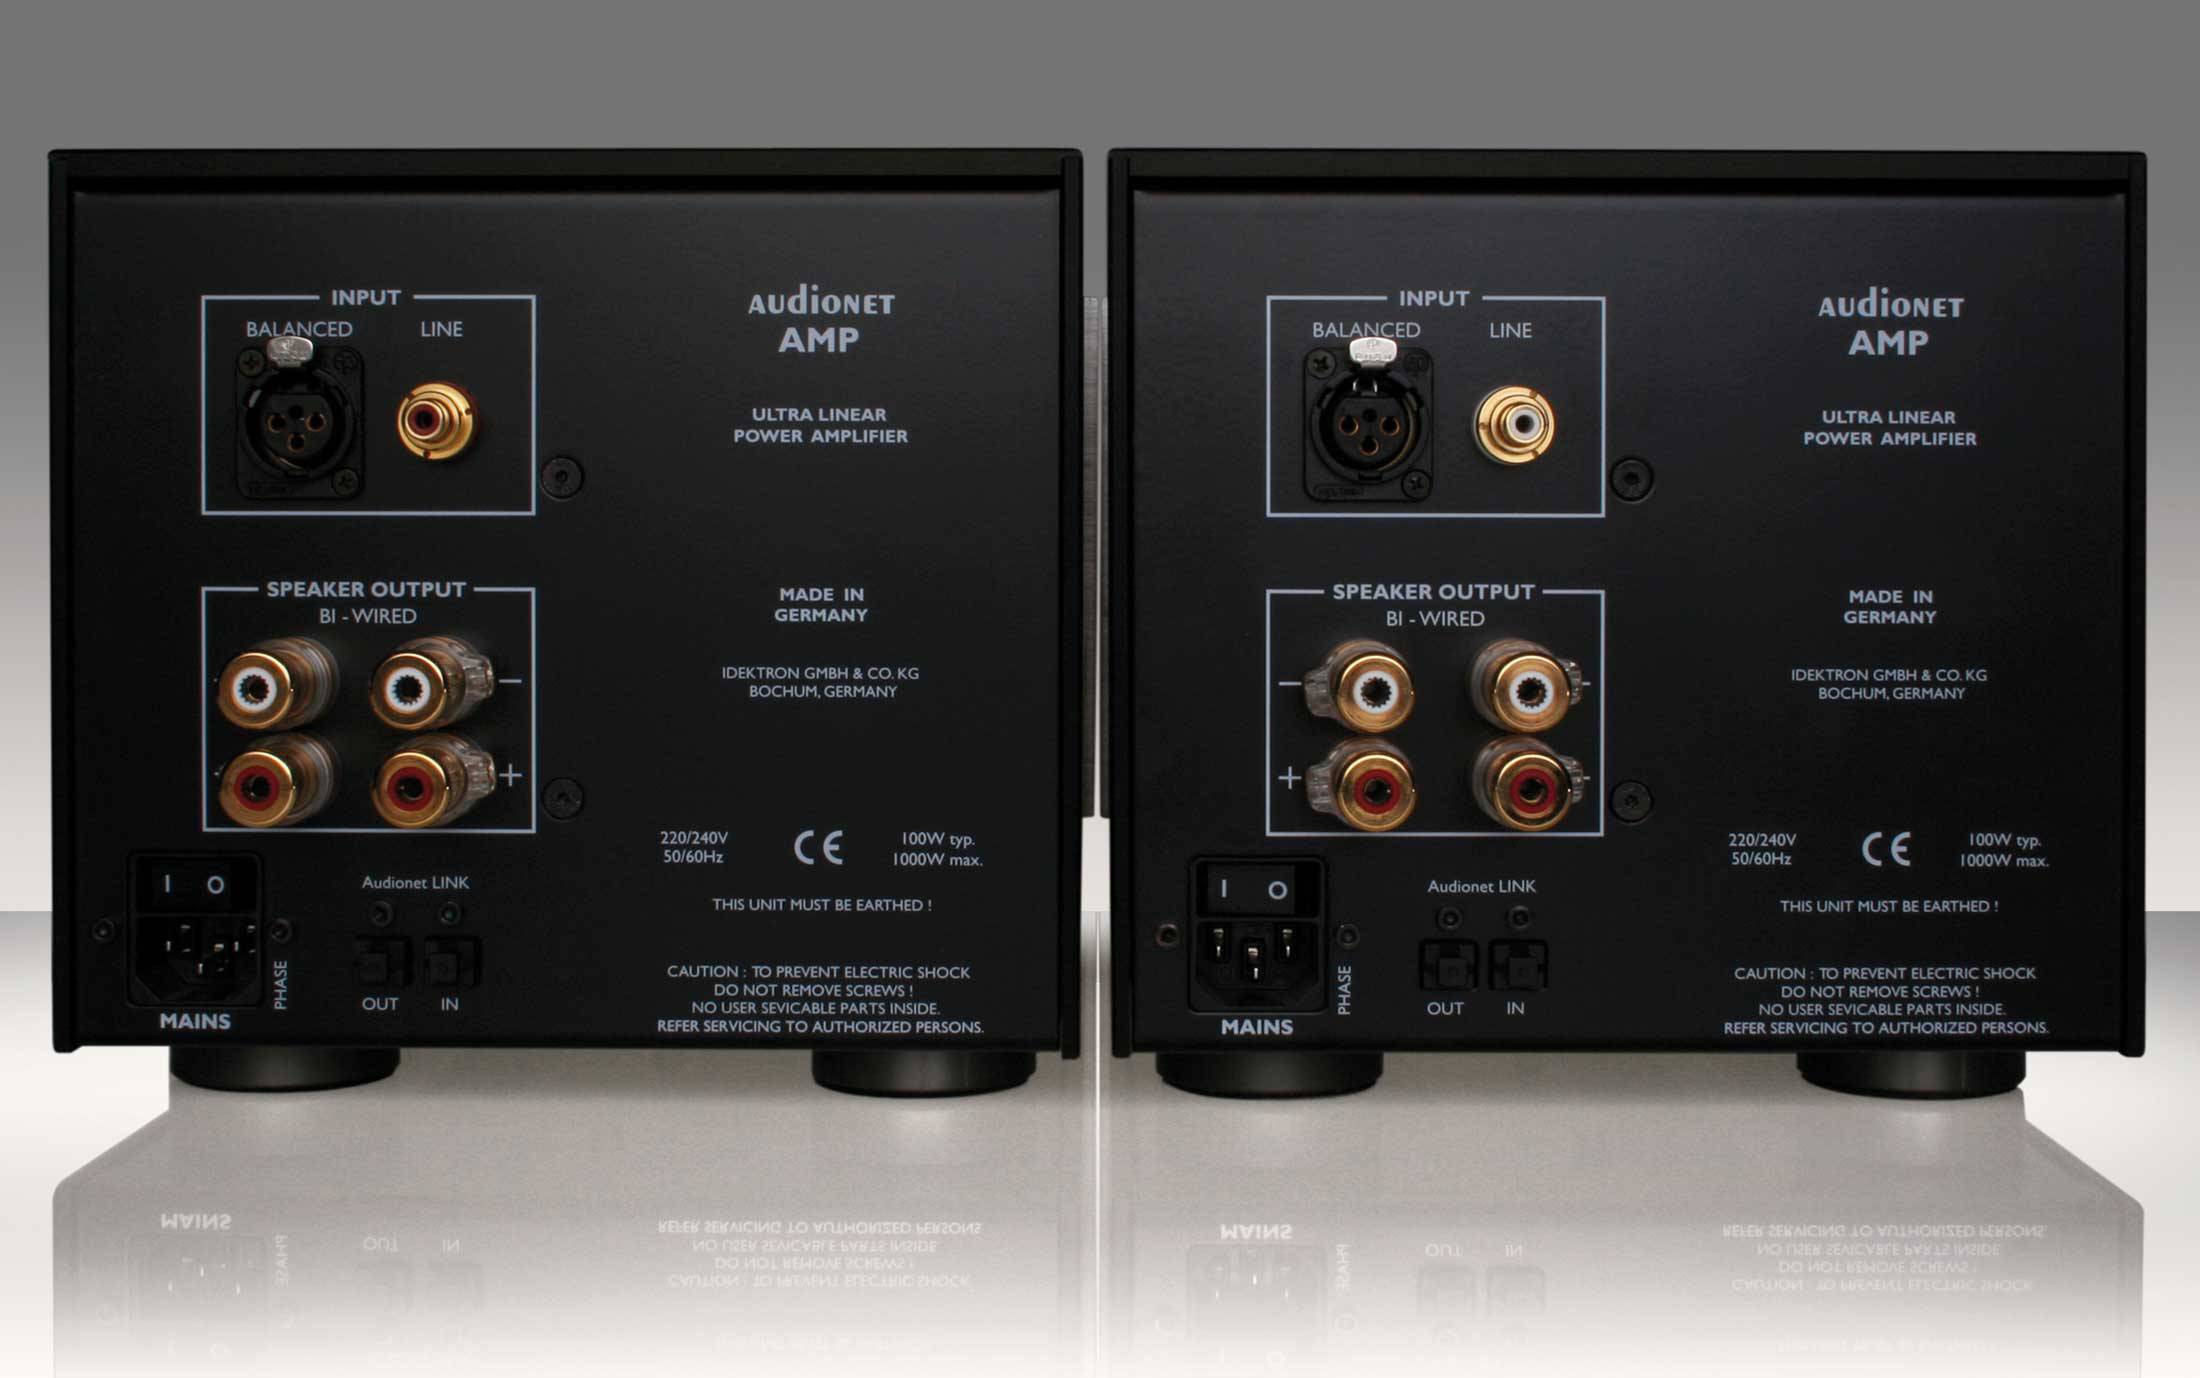 Audionet AMP III (2CH)